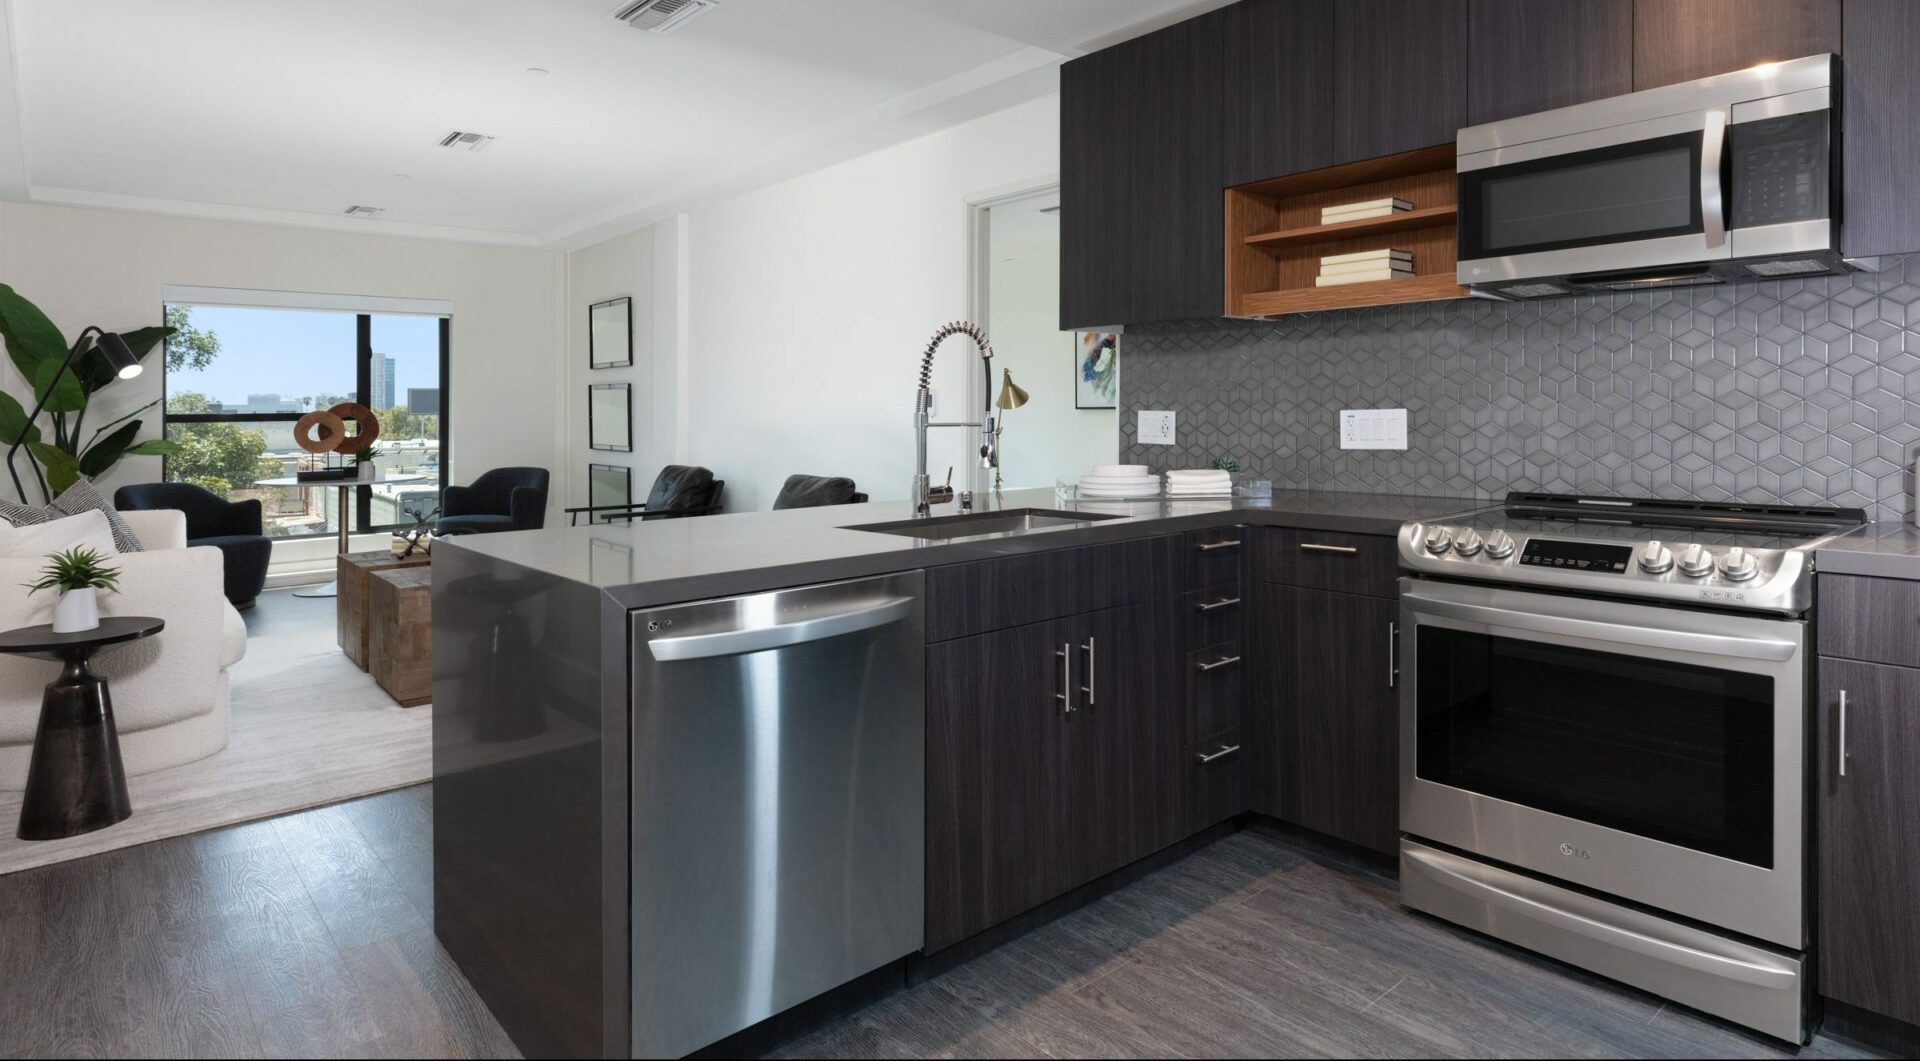 The Logan model apartment kitchen